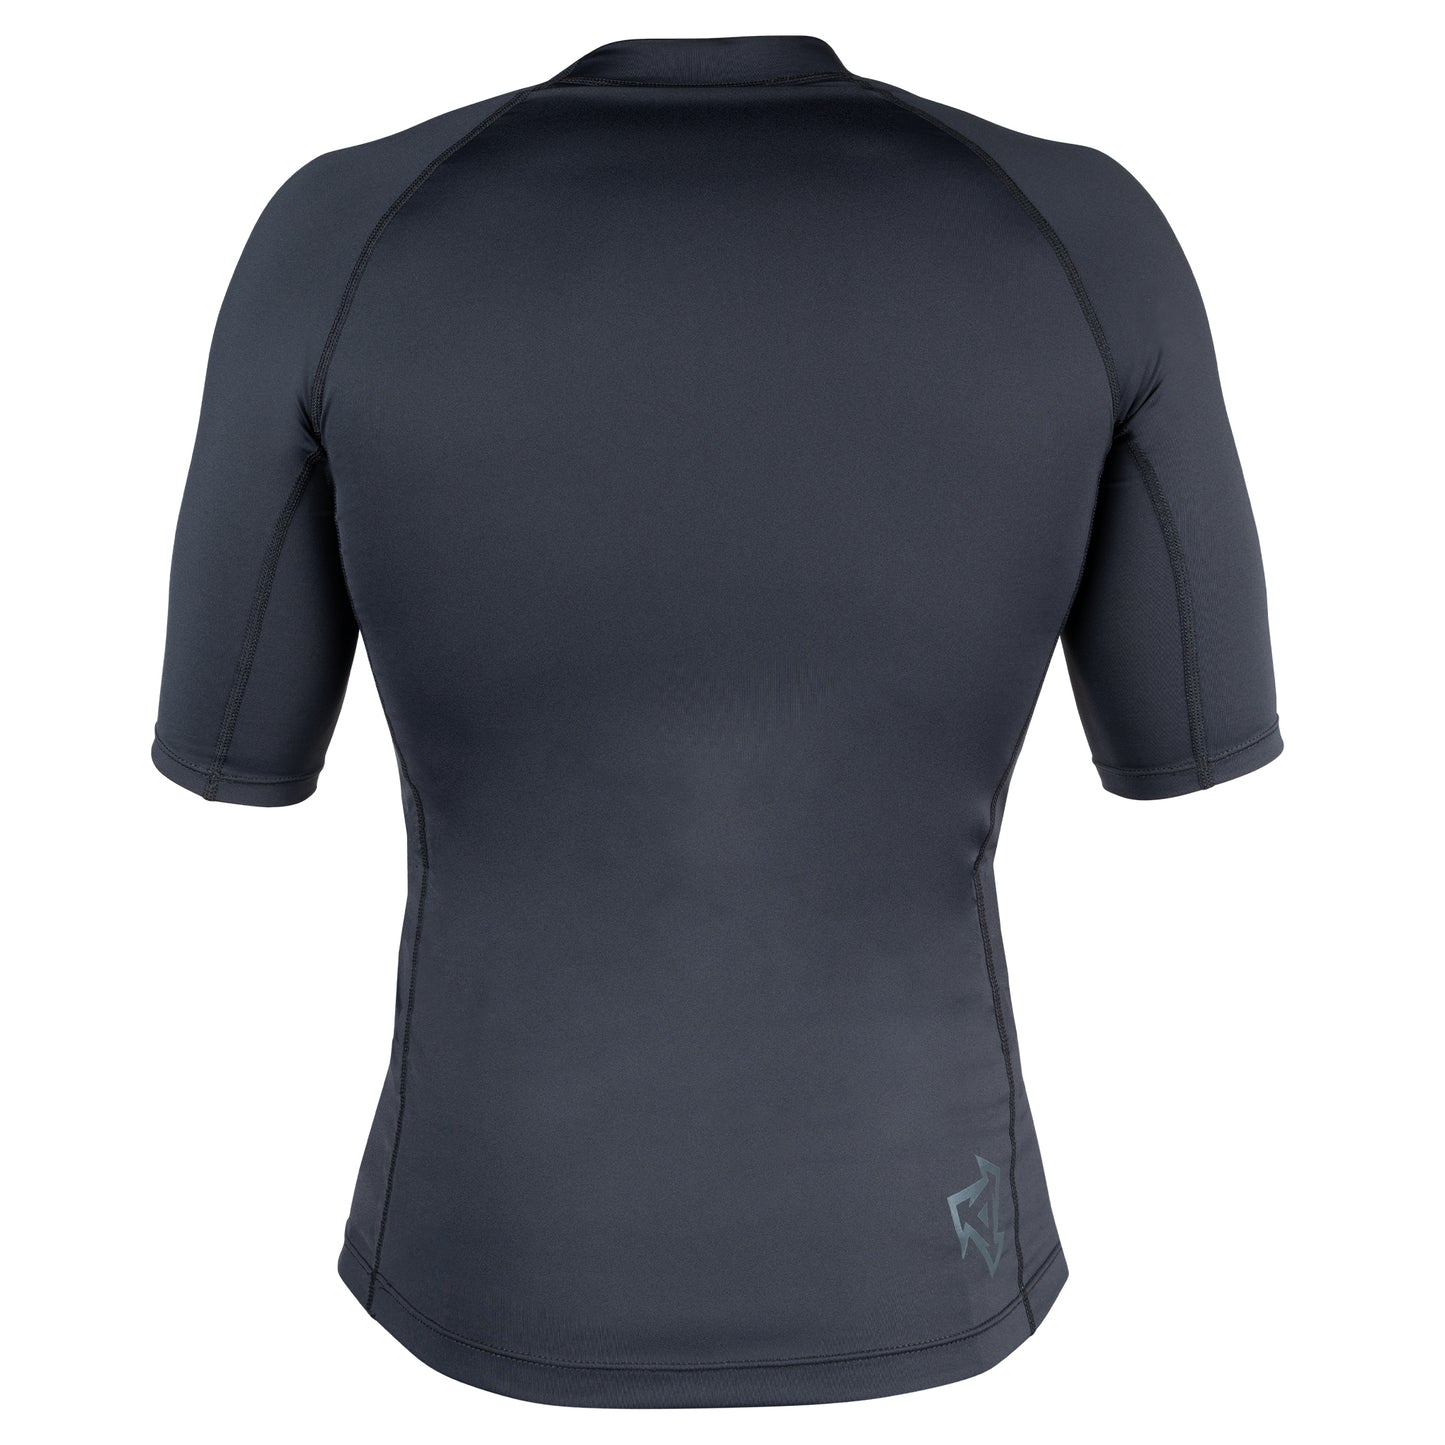 Men's Premium Stretch Short Sleeve Performance Fit UV Top